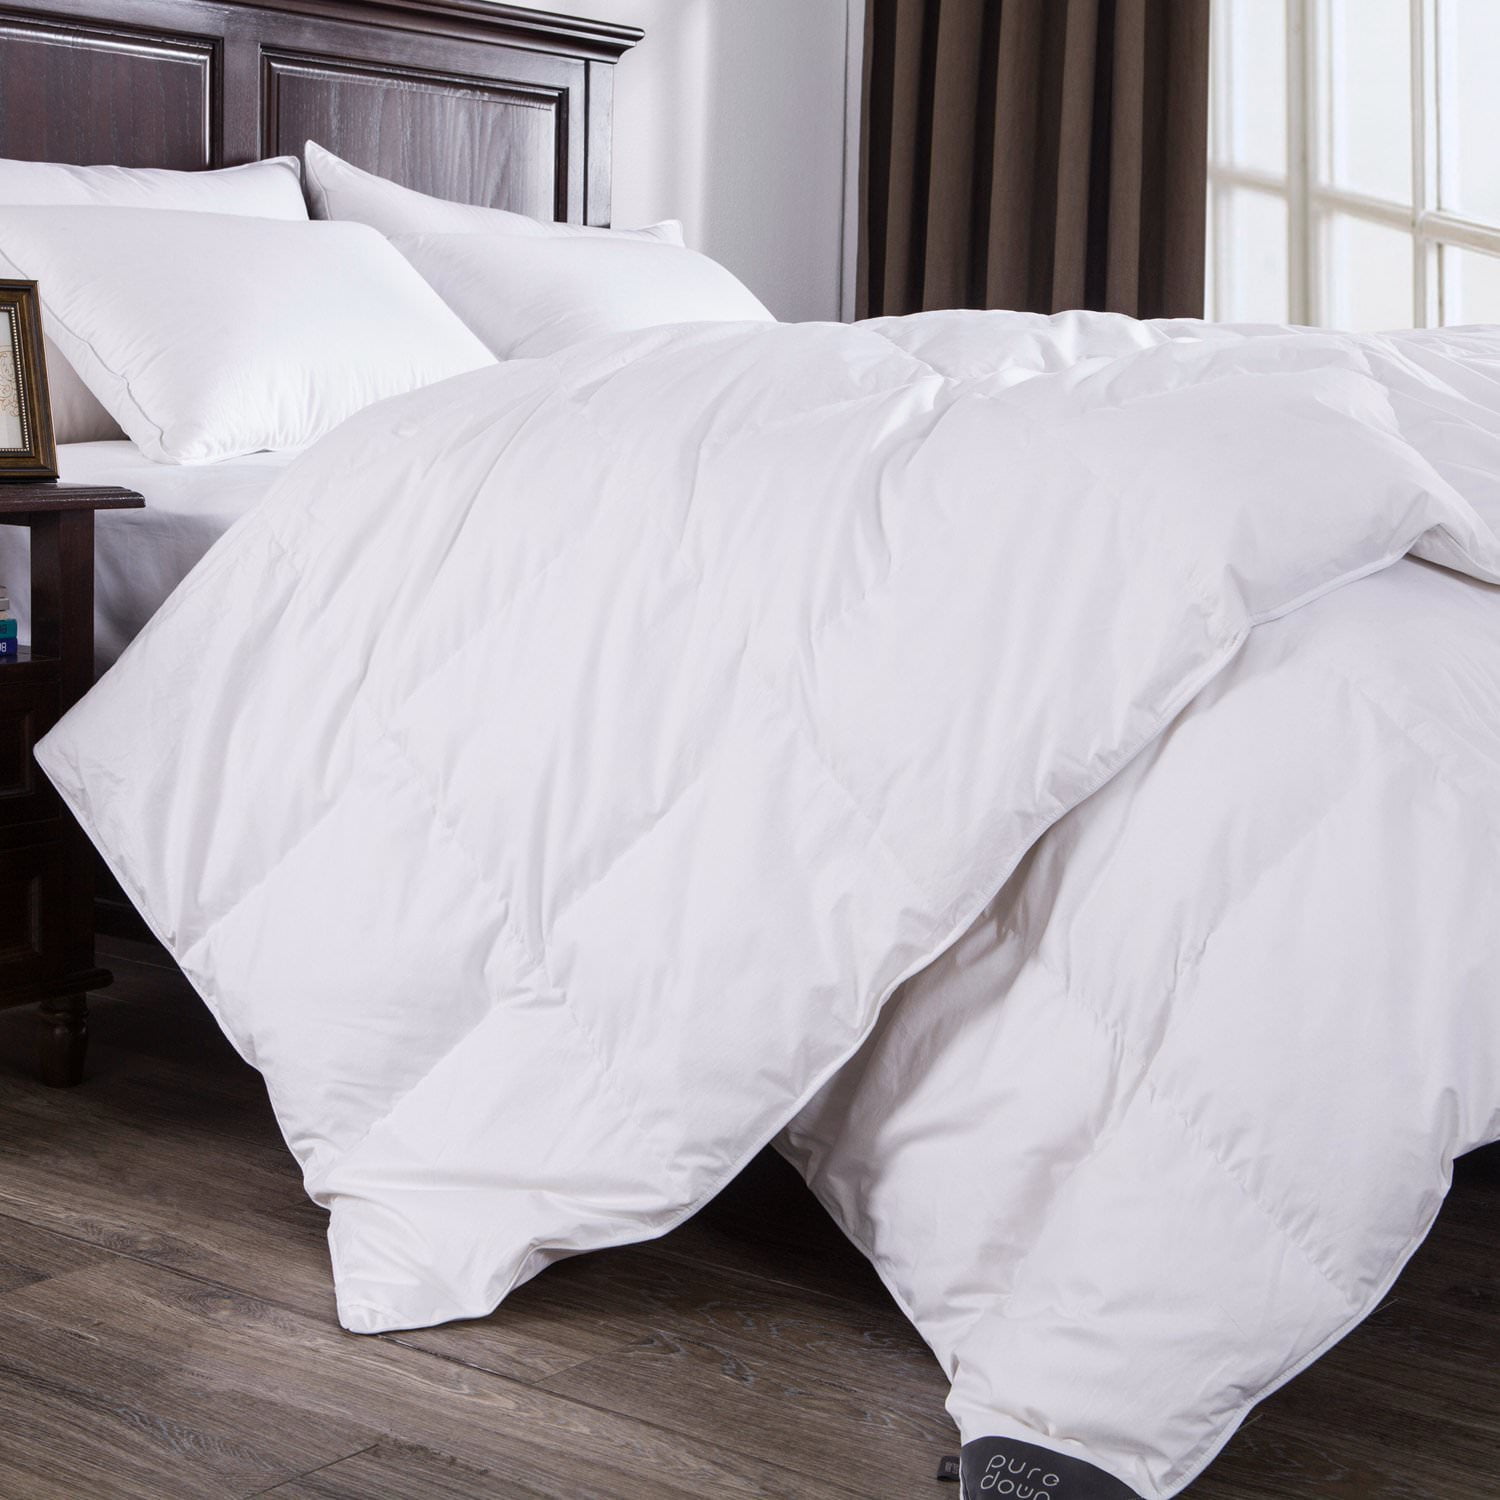 European Down Comforter Duvet Insert, How To Stuff A Down Comforter Into Duvet Cover